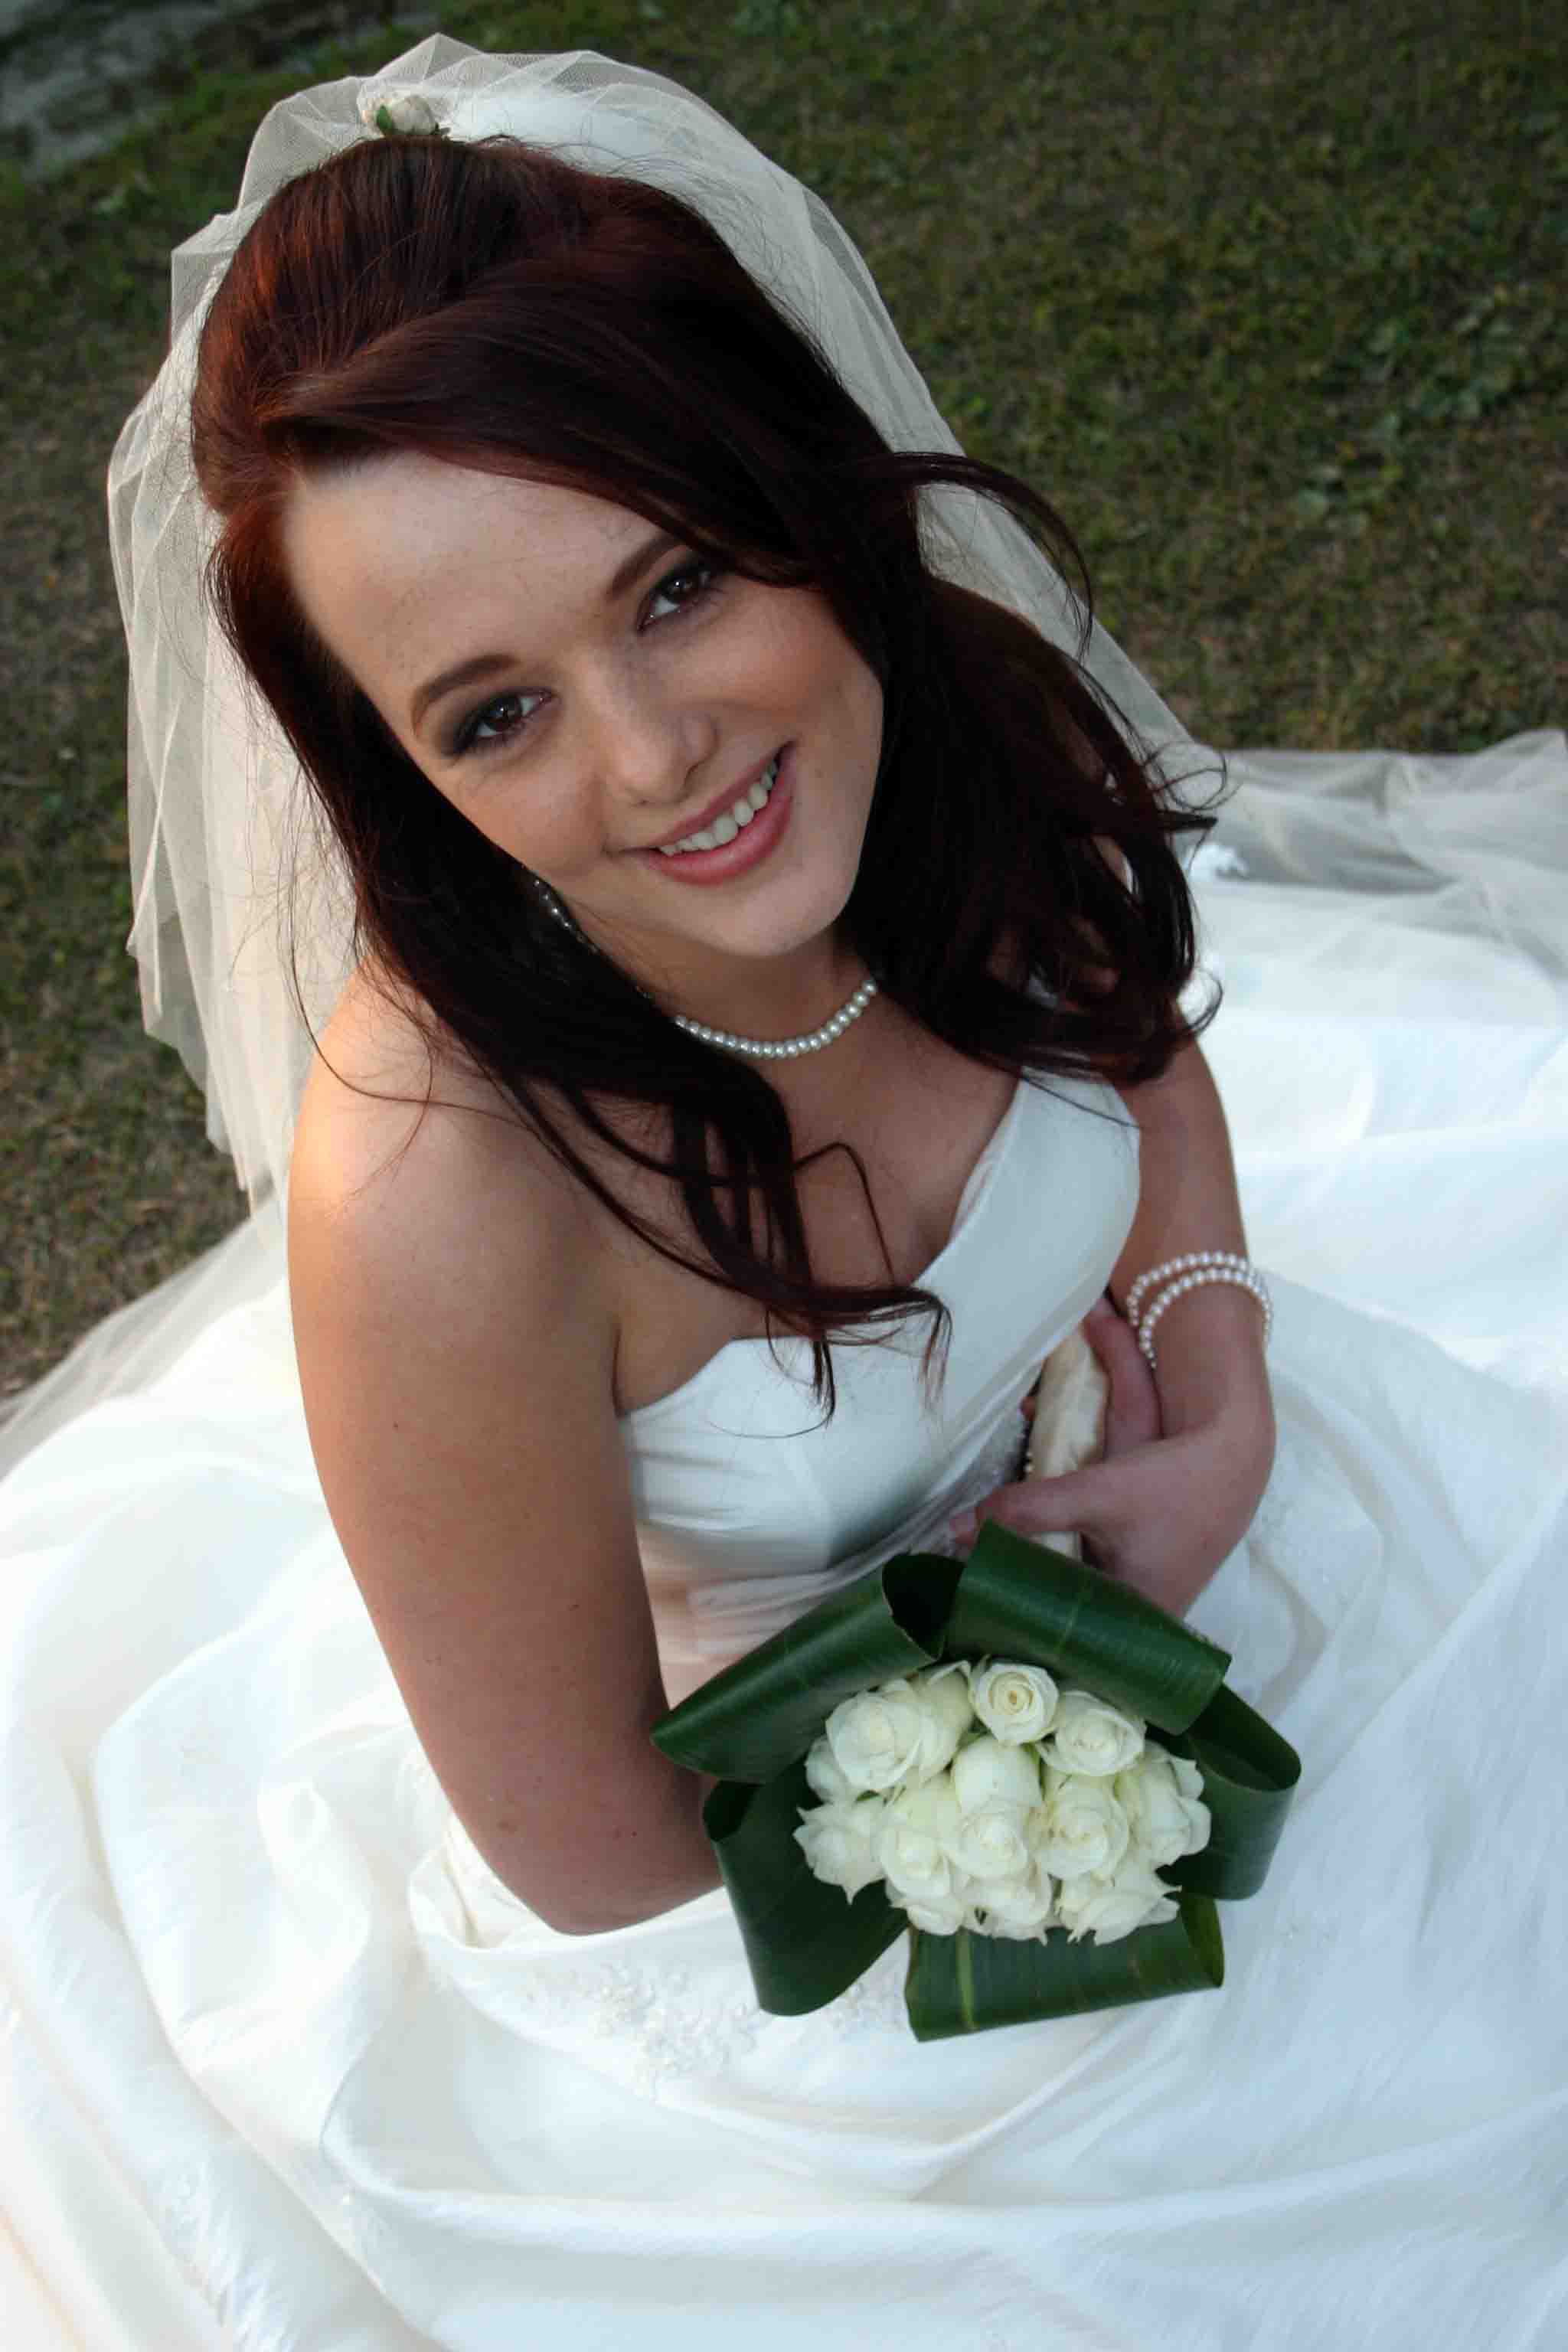 Jenna, the bride